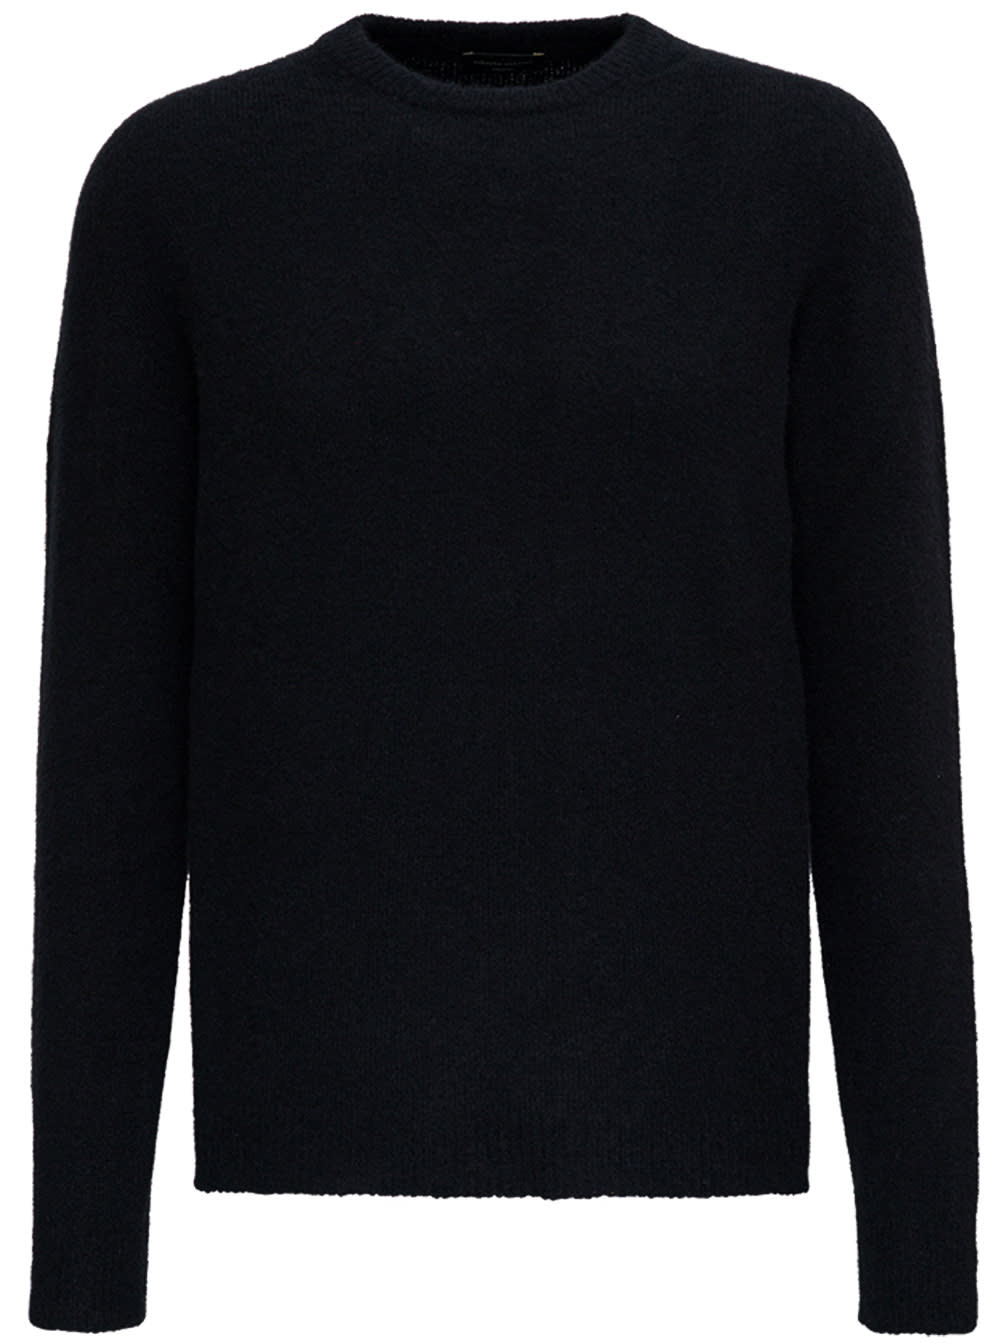 Roberto Collina Black Cashmere Crew Neck Sweater